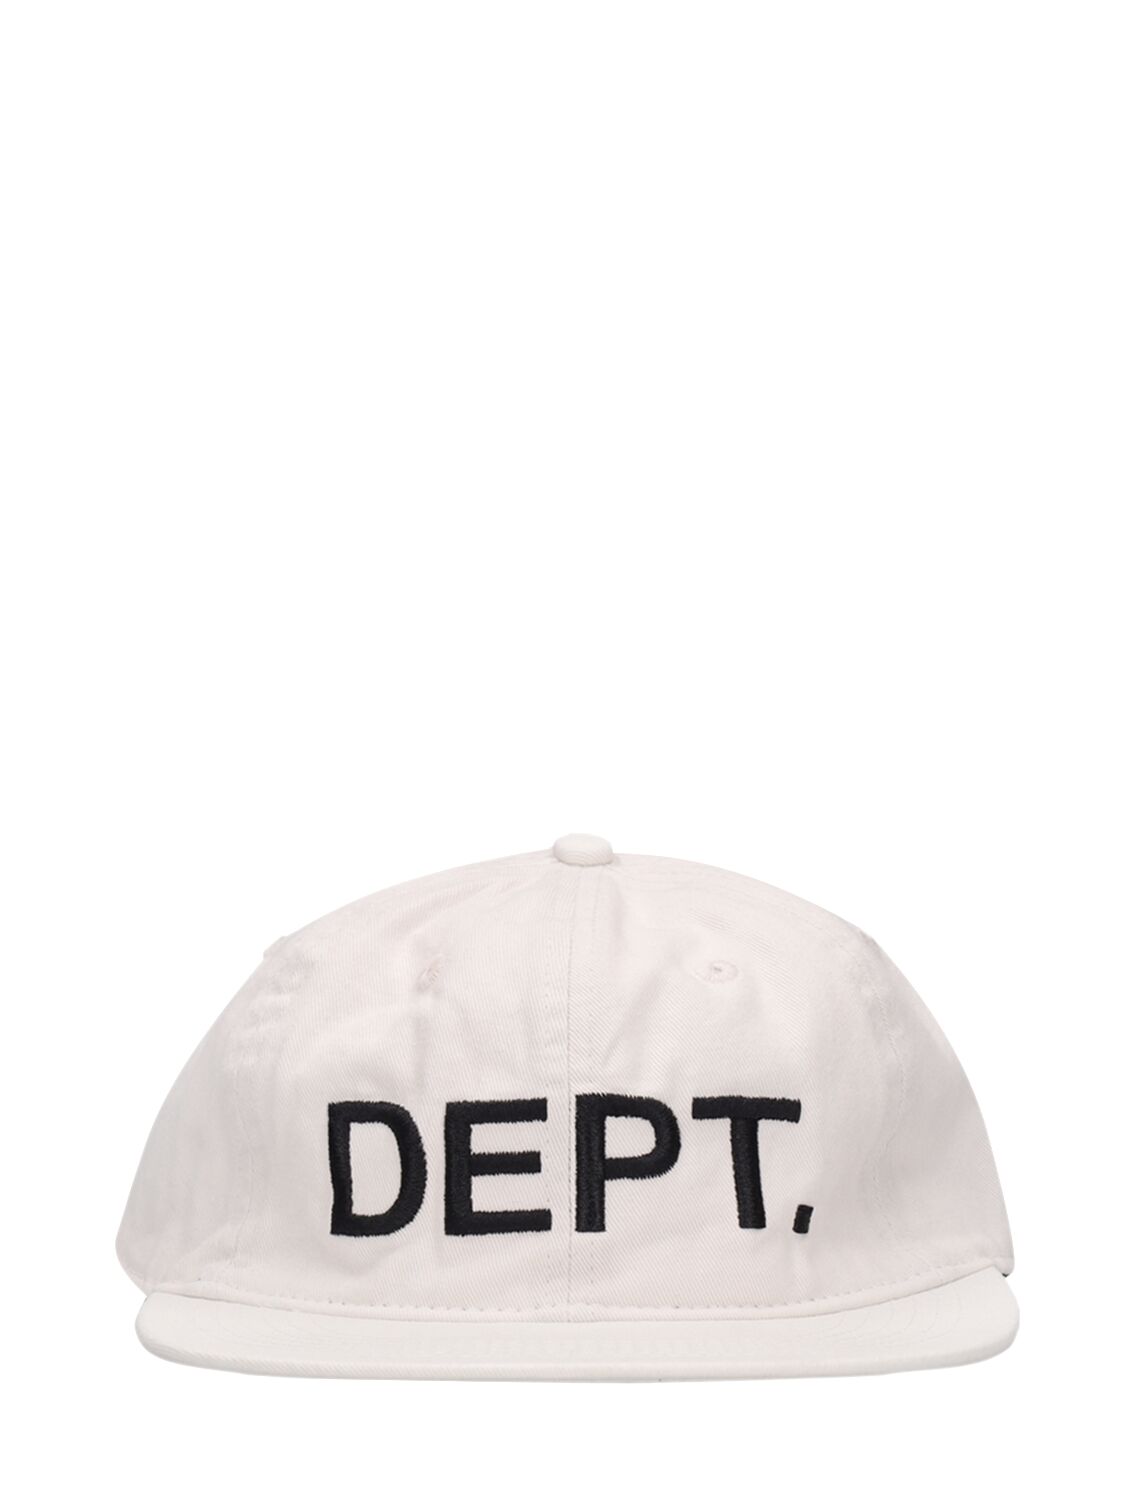 Shop Gallery Dept. Dept. Hat In White